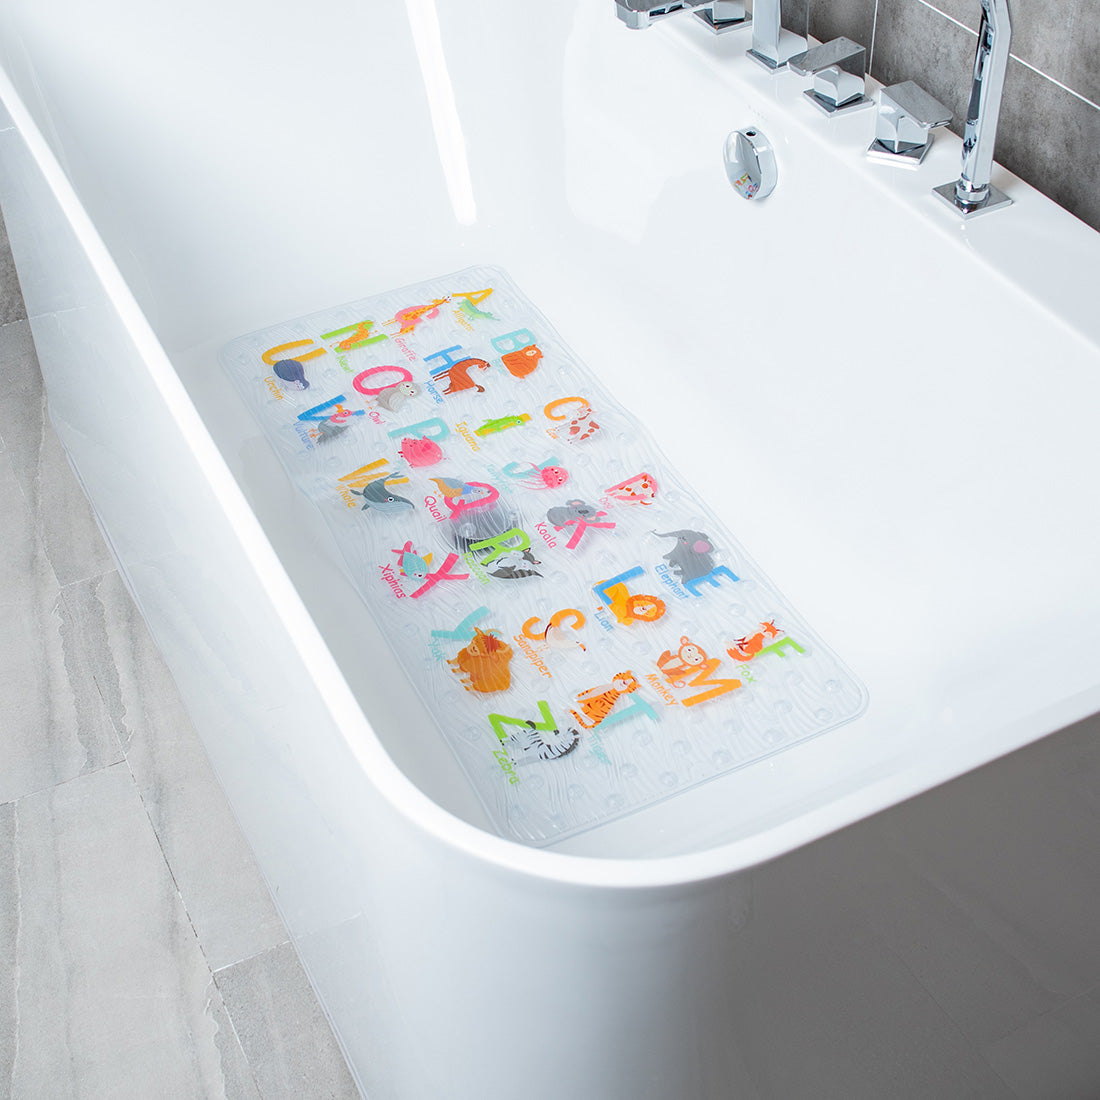 Shengxiny Bathroom Rugs Clearance Nonslip Bathtub Mat Extra Soft Bath Mat for Kids, Machine Washable Bathroom Shower Mat, Size: Large